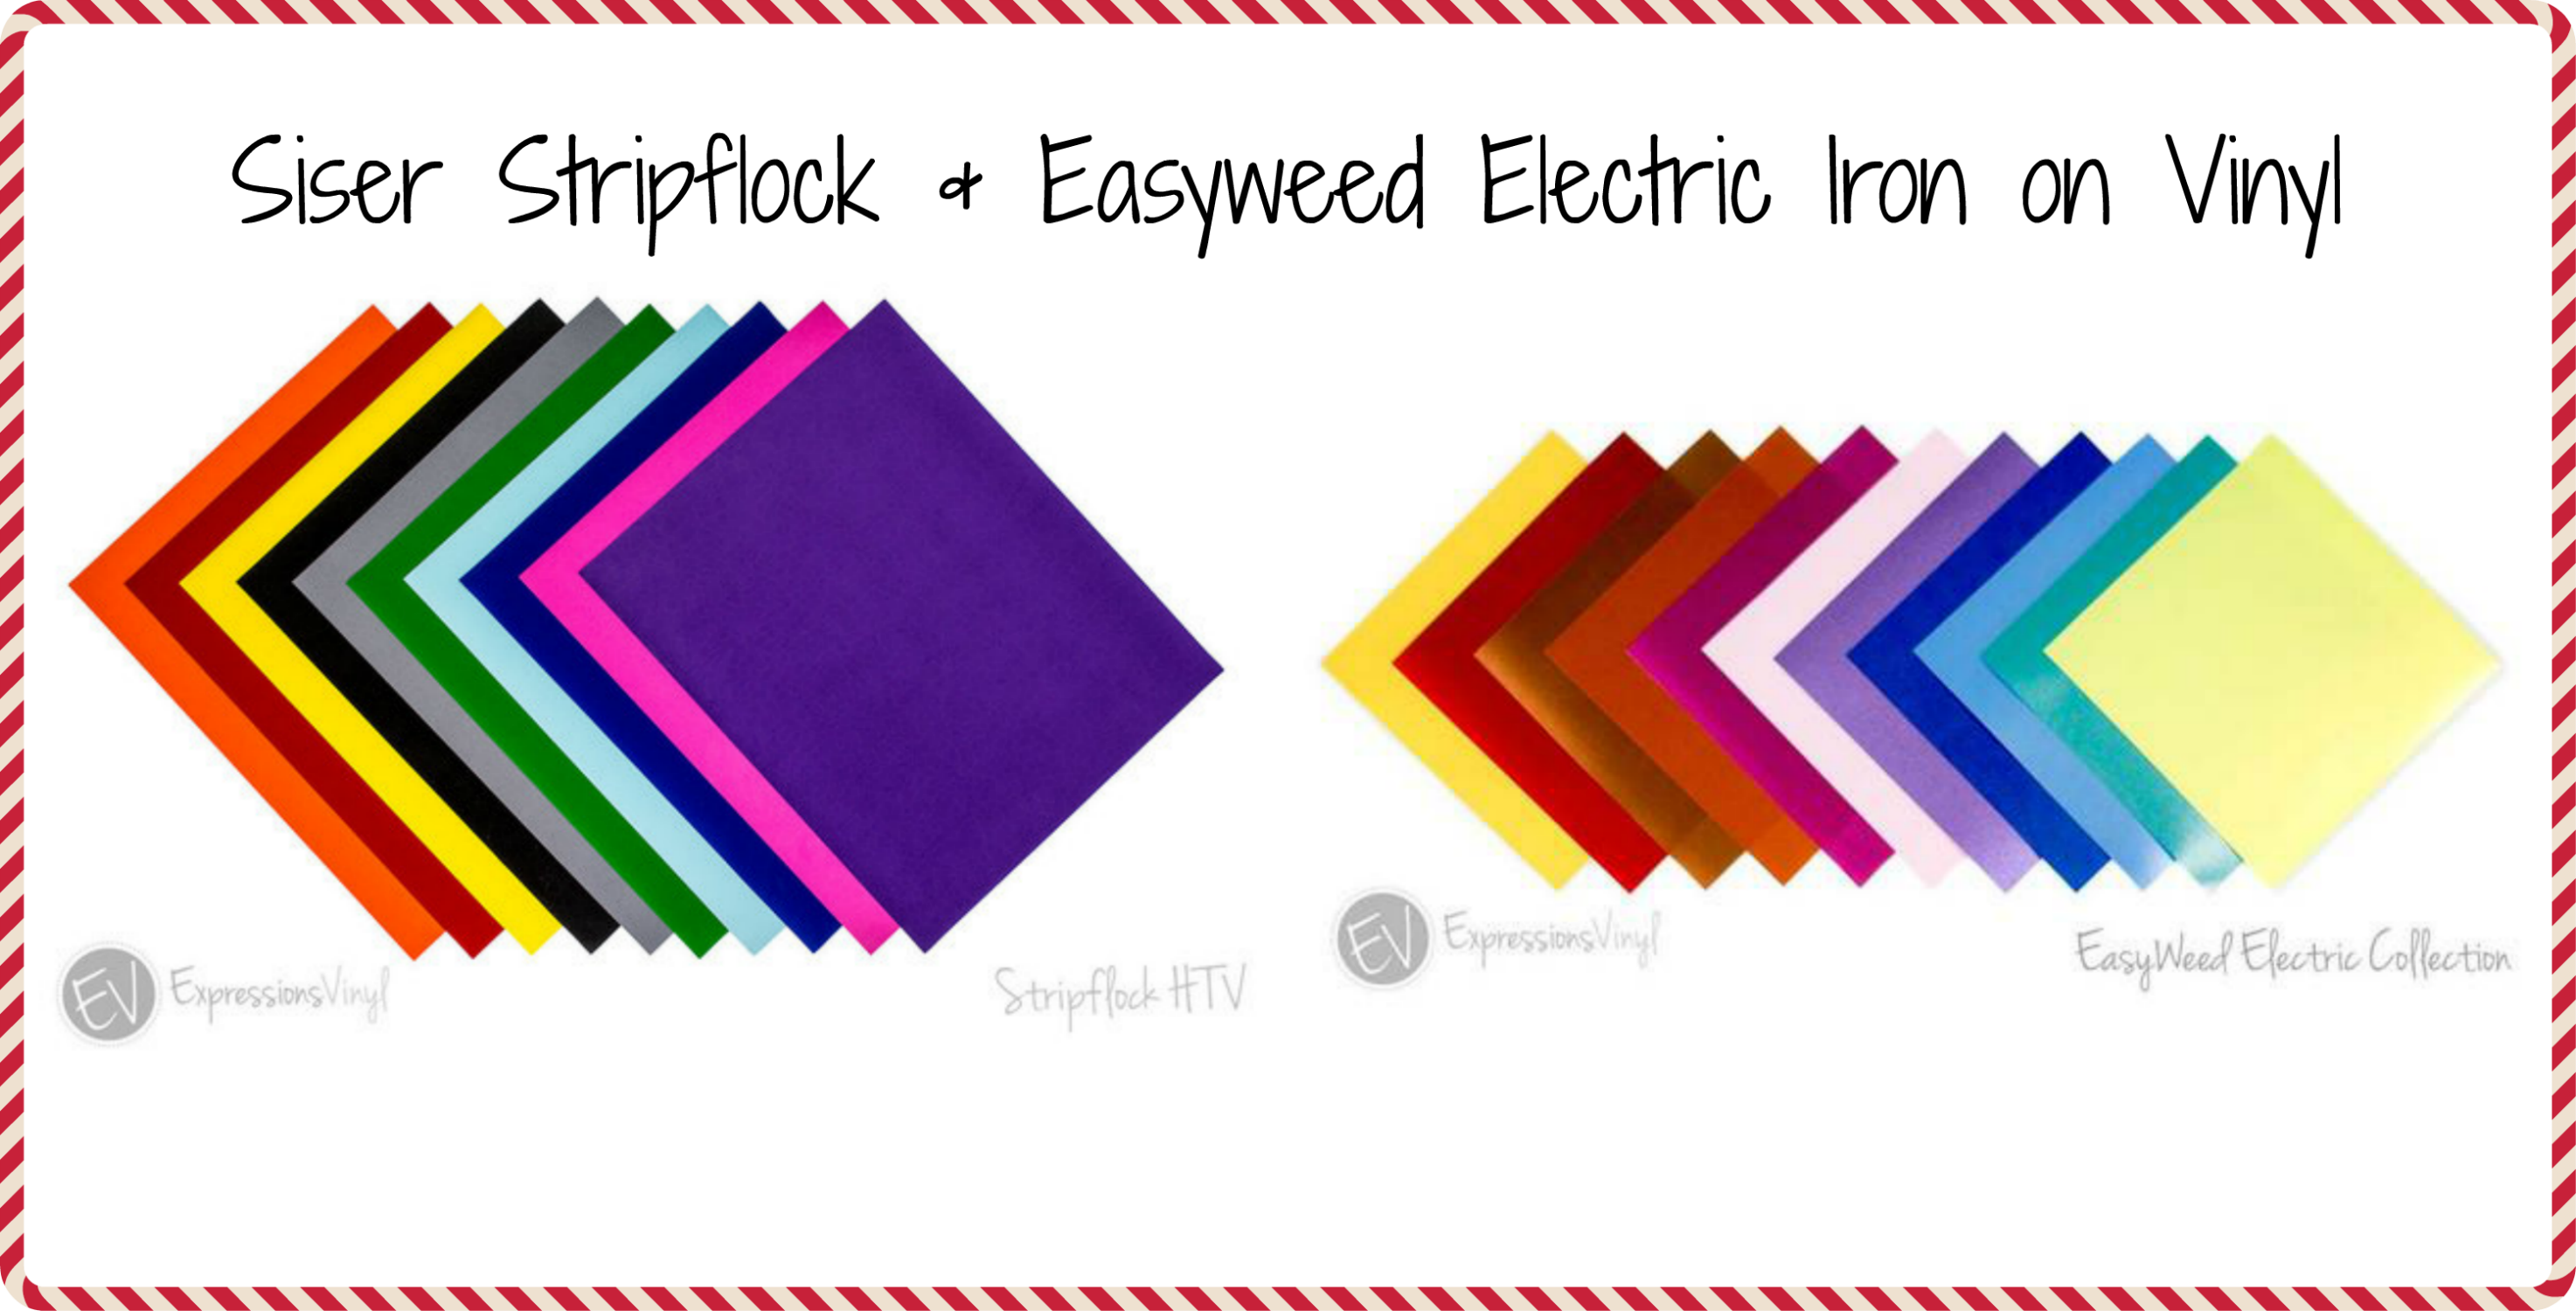 HTV Iron On Vinyl Siser Stripflock & Easyweed Electric